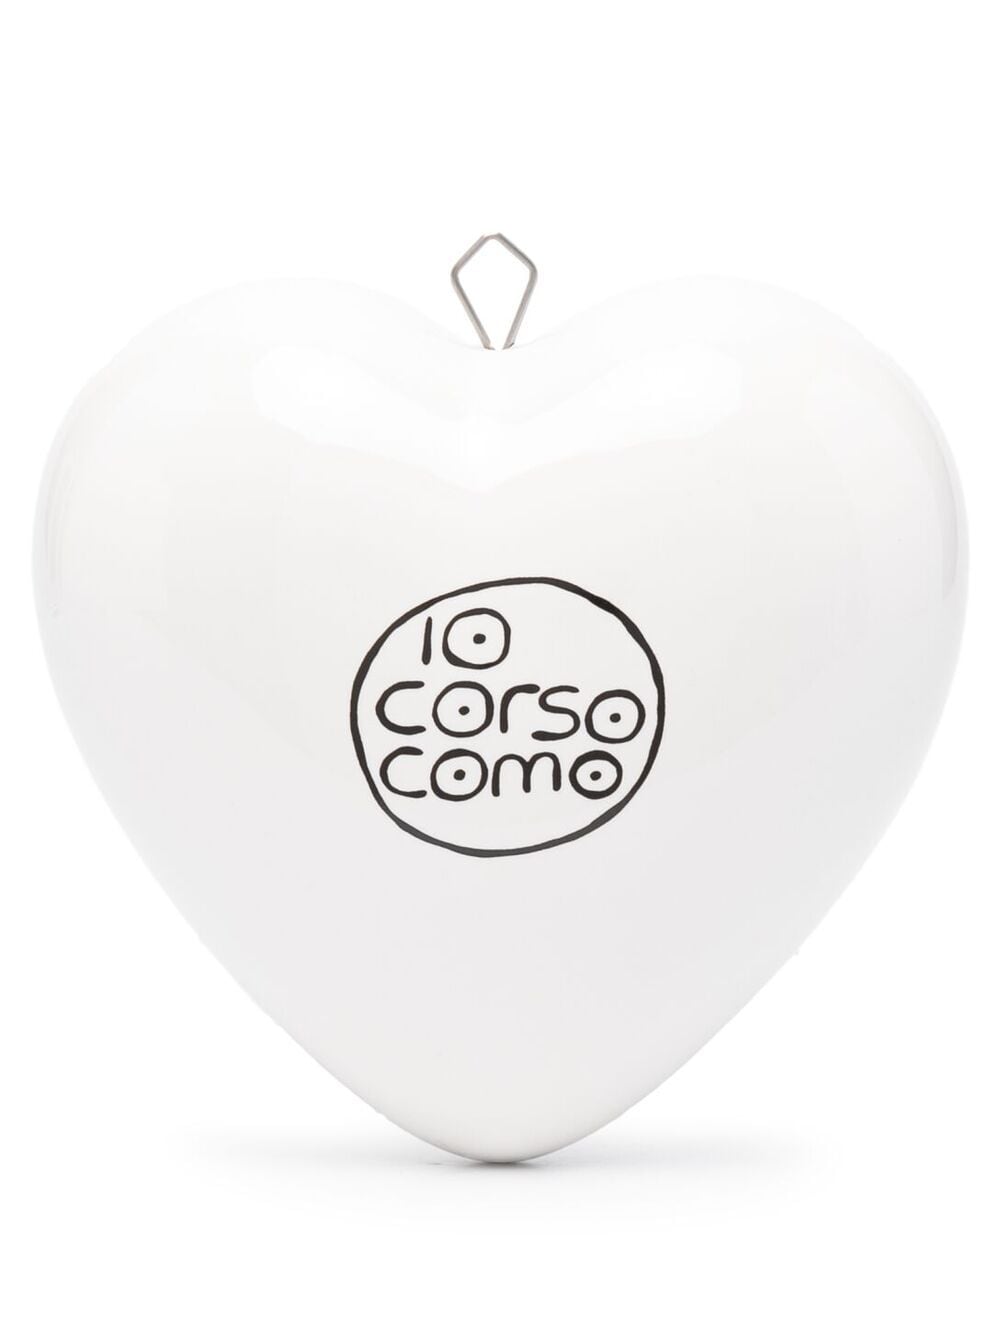 10 CORSO COMO Joy ceramic paper weight - White von 10 CORSO COMO